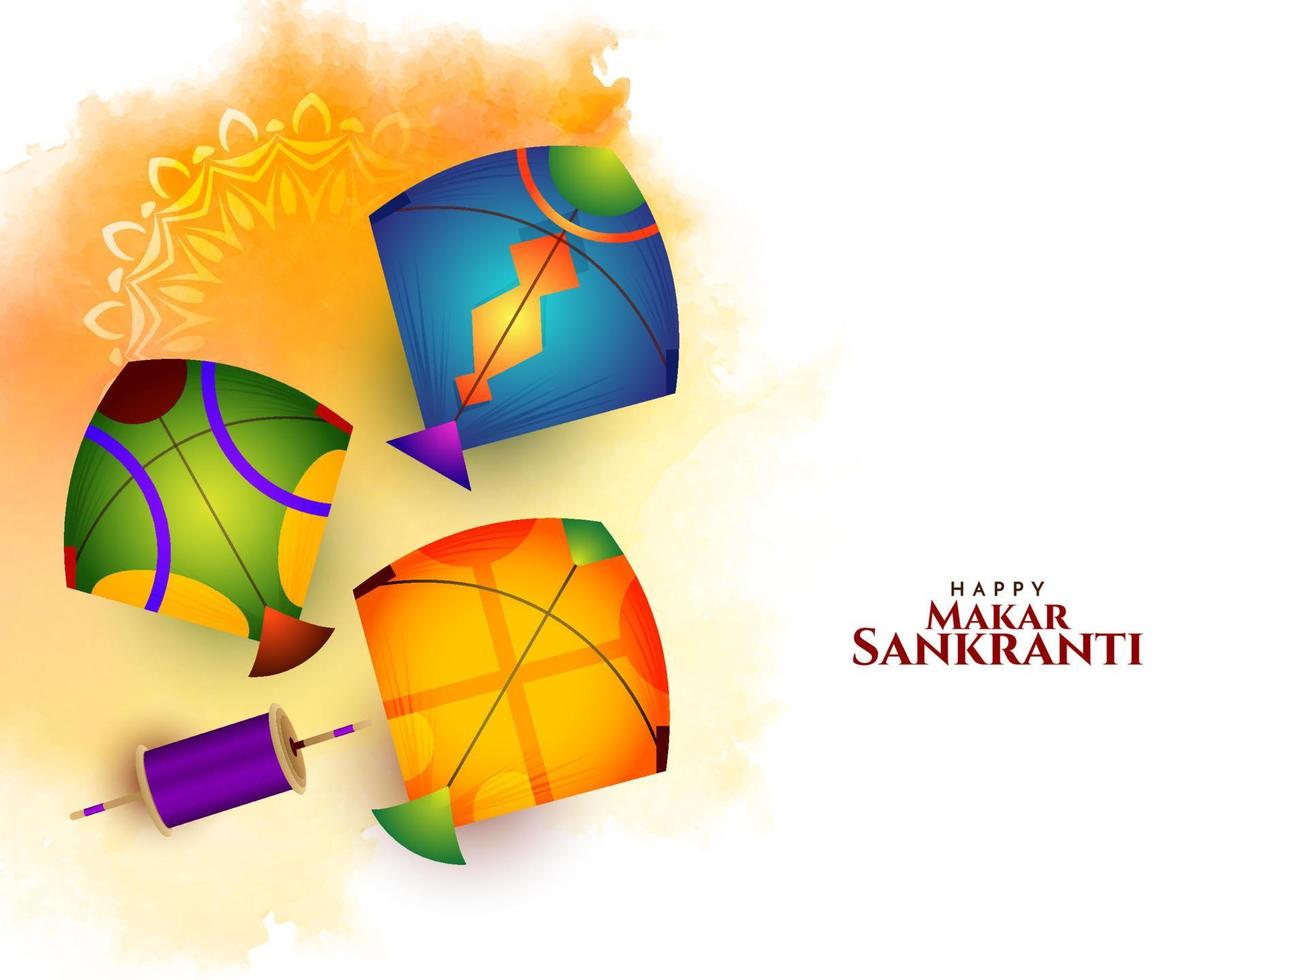 Traditional Indian Makar Sankranti festival celebration background vector